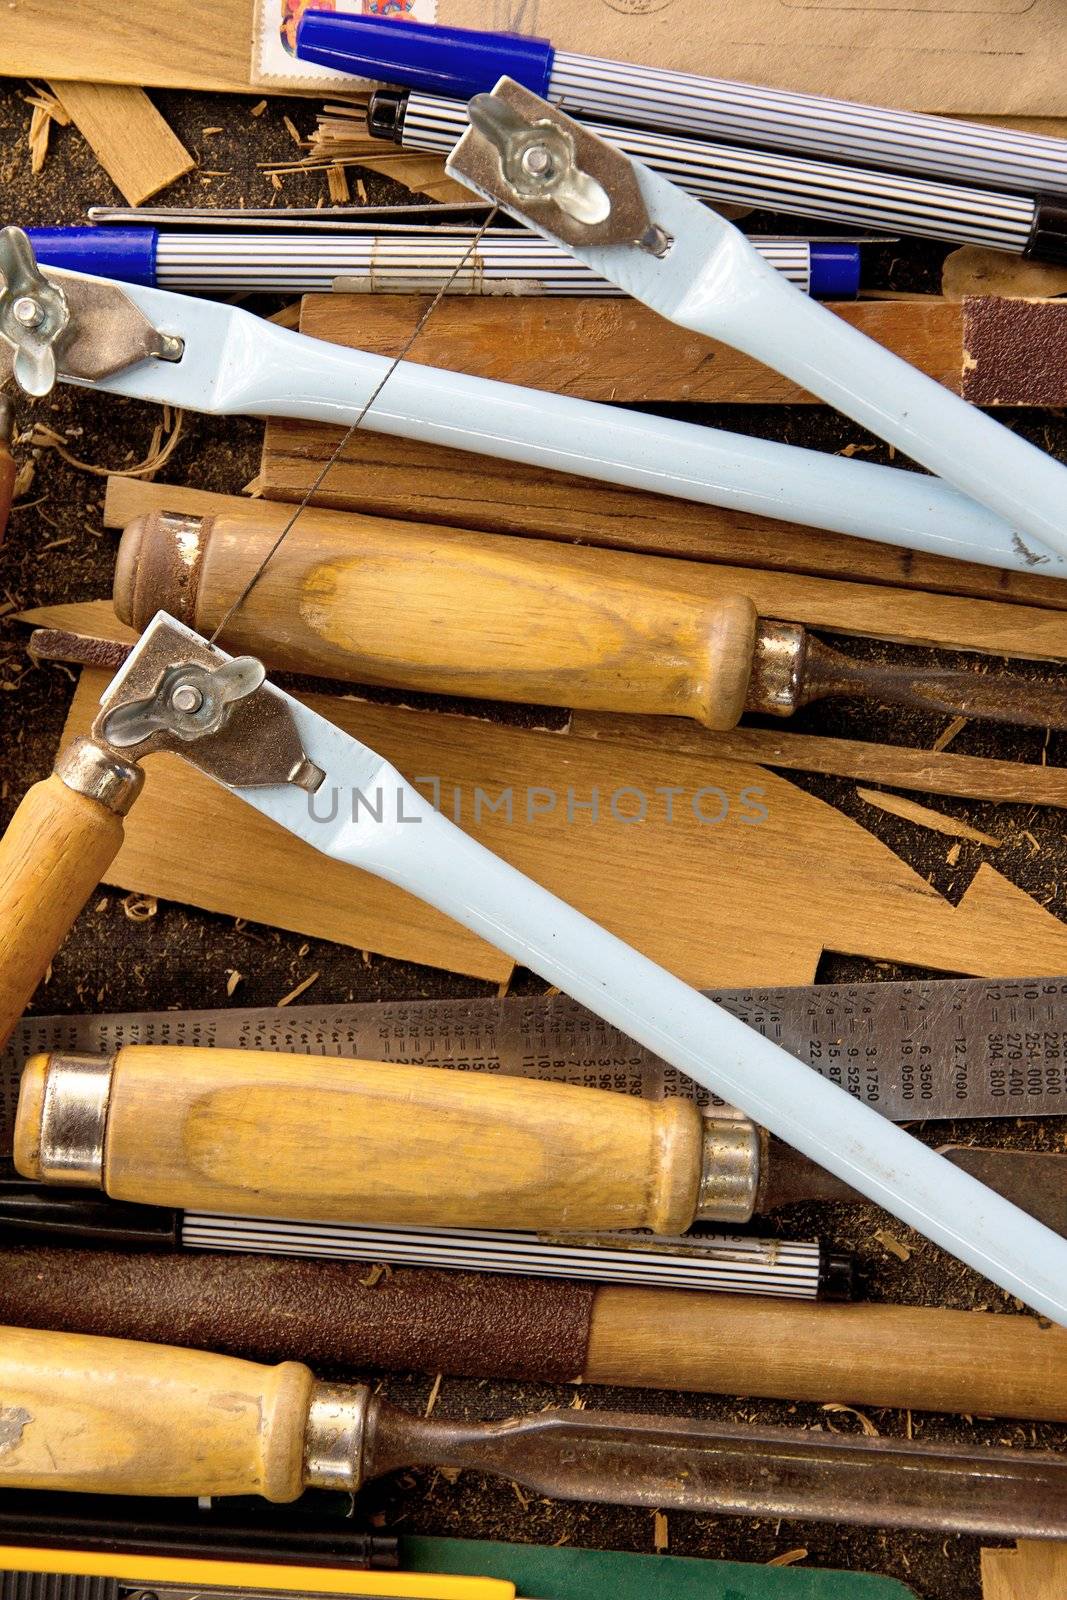 tools-woodcraft background